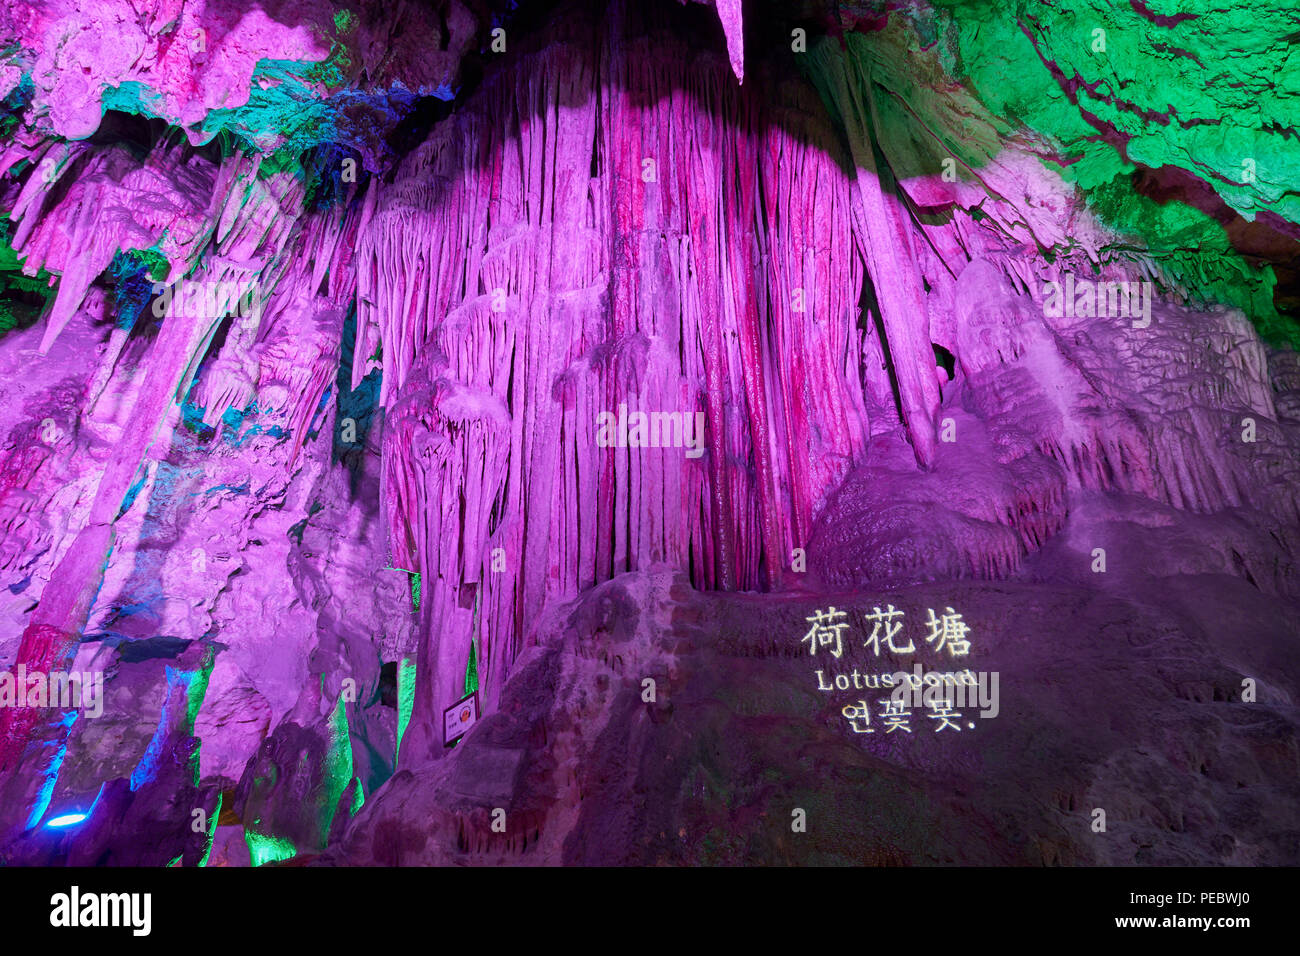 Lotus Pond, illuminato grotta carsica, Zhashui County, Shaanxi, Cina Foto Stock